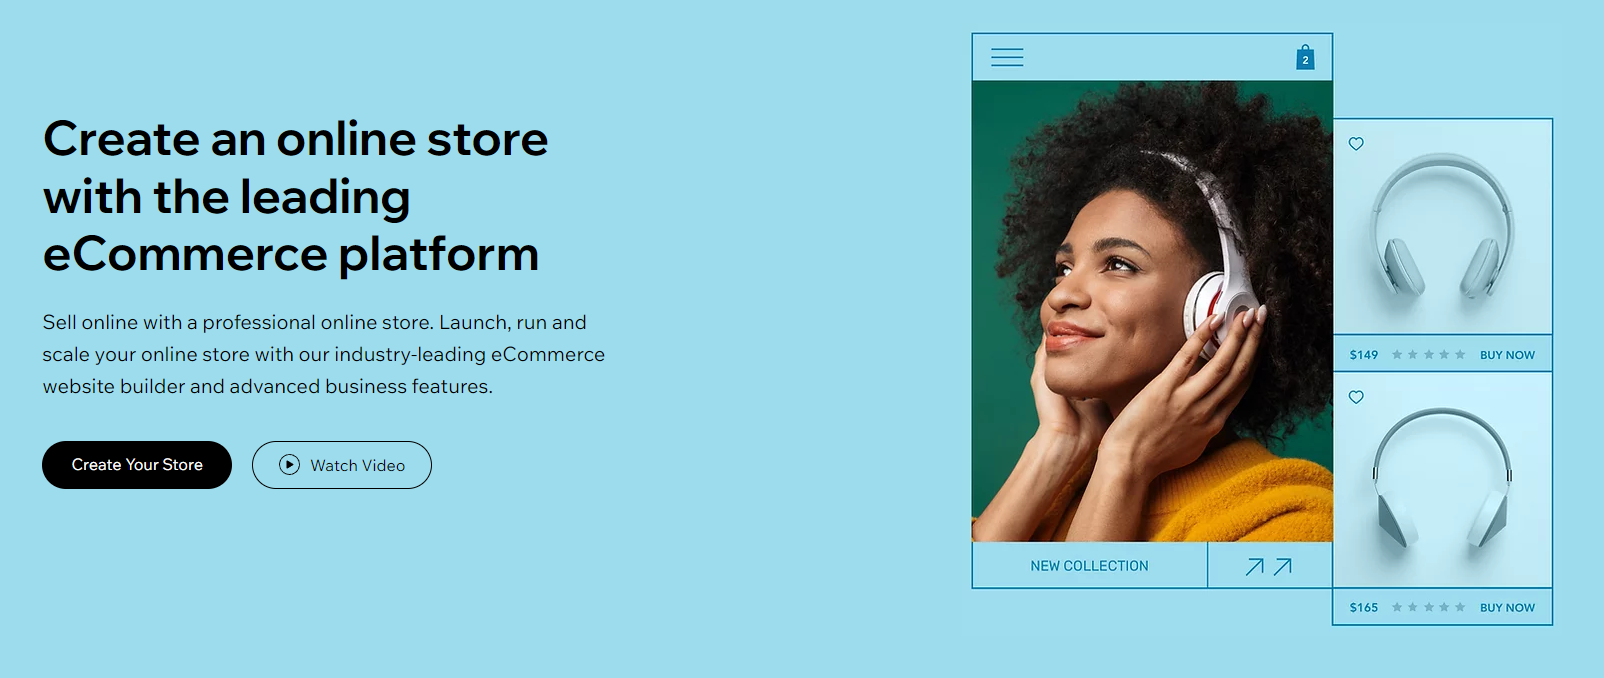 wix ecommerce platform page